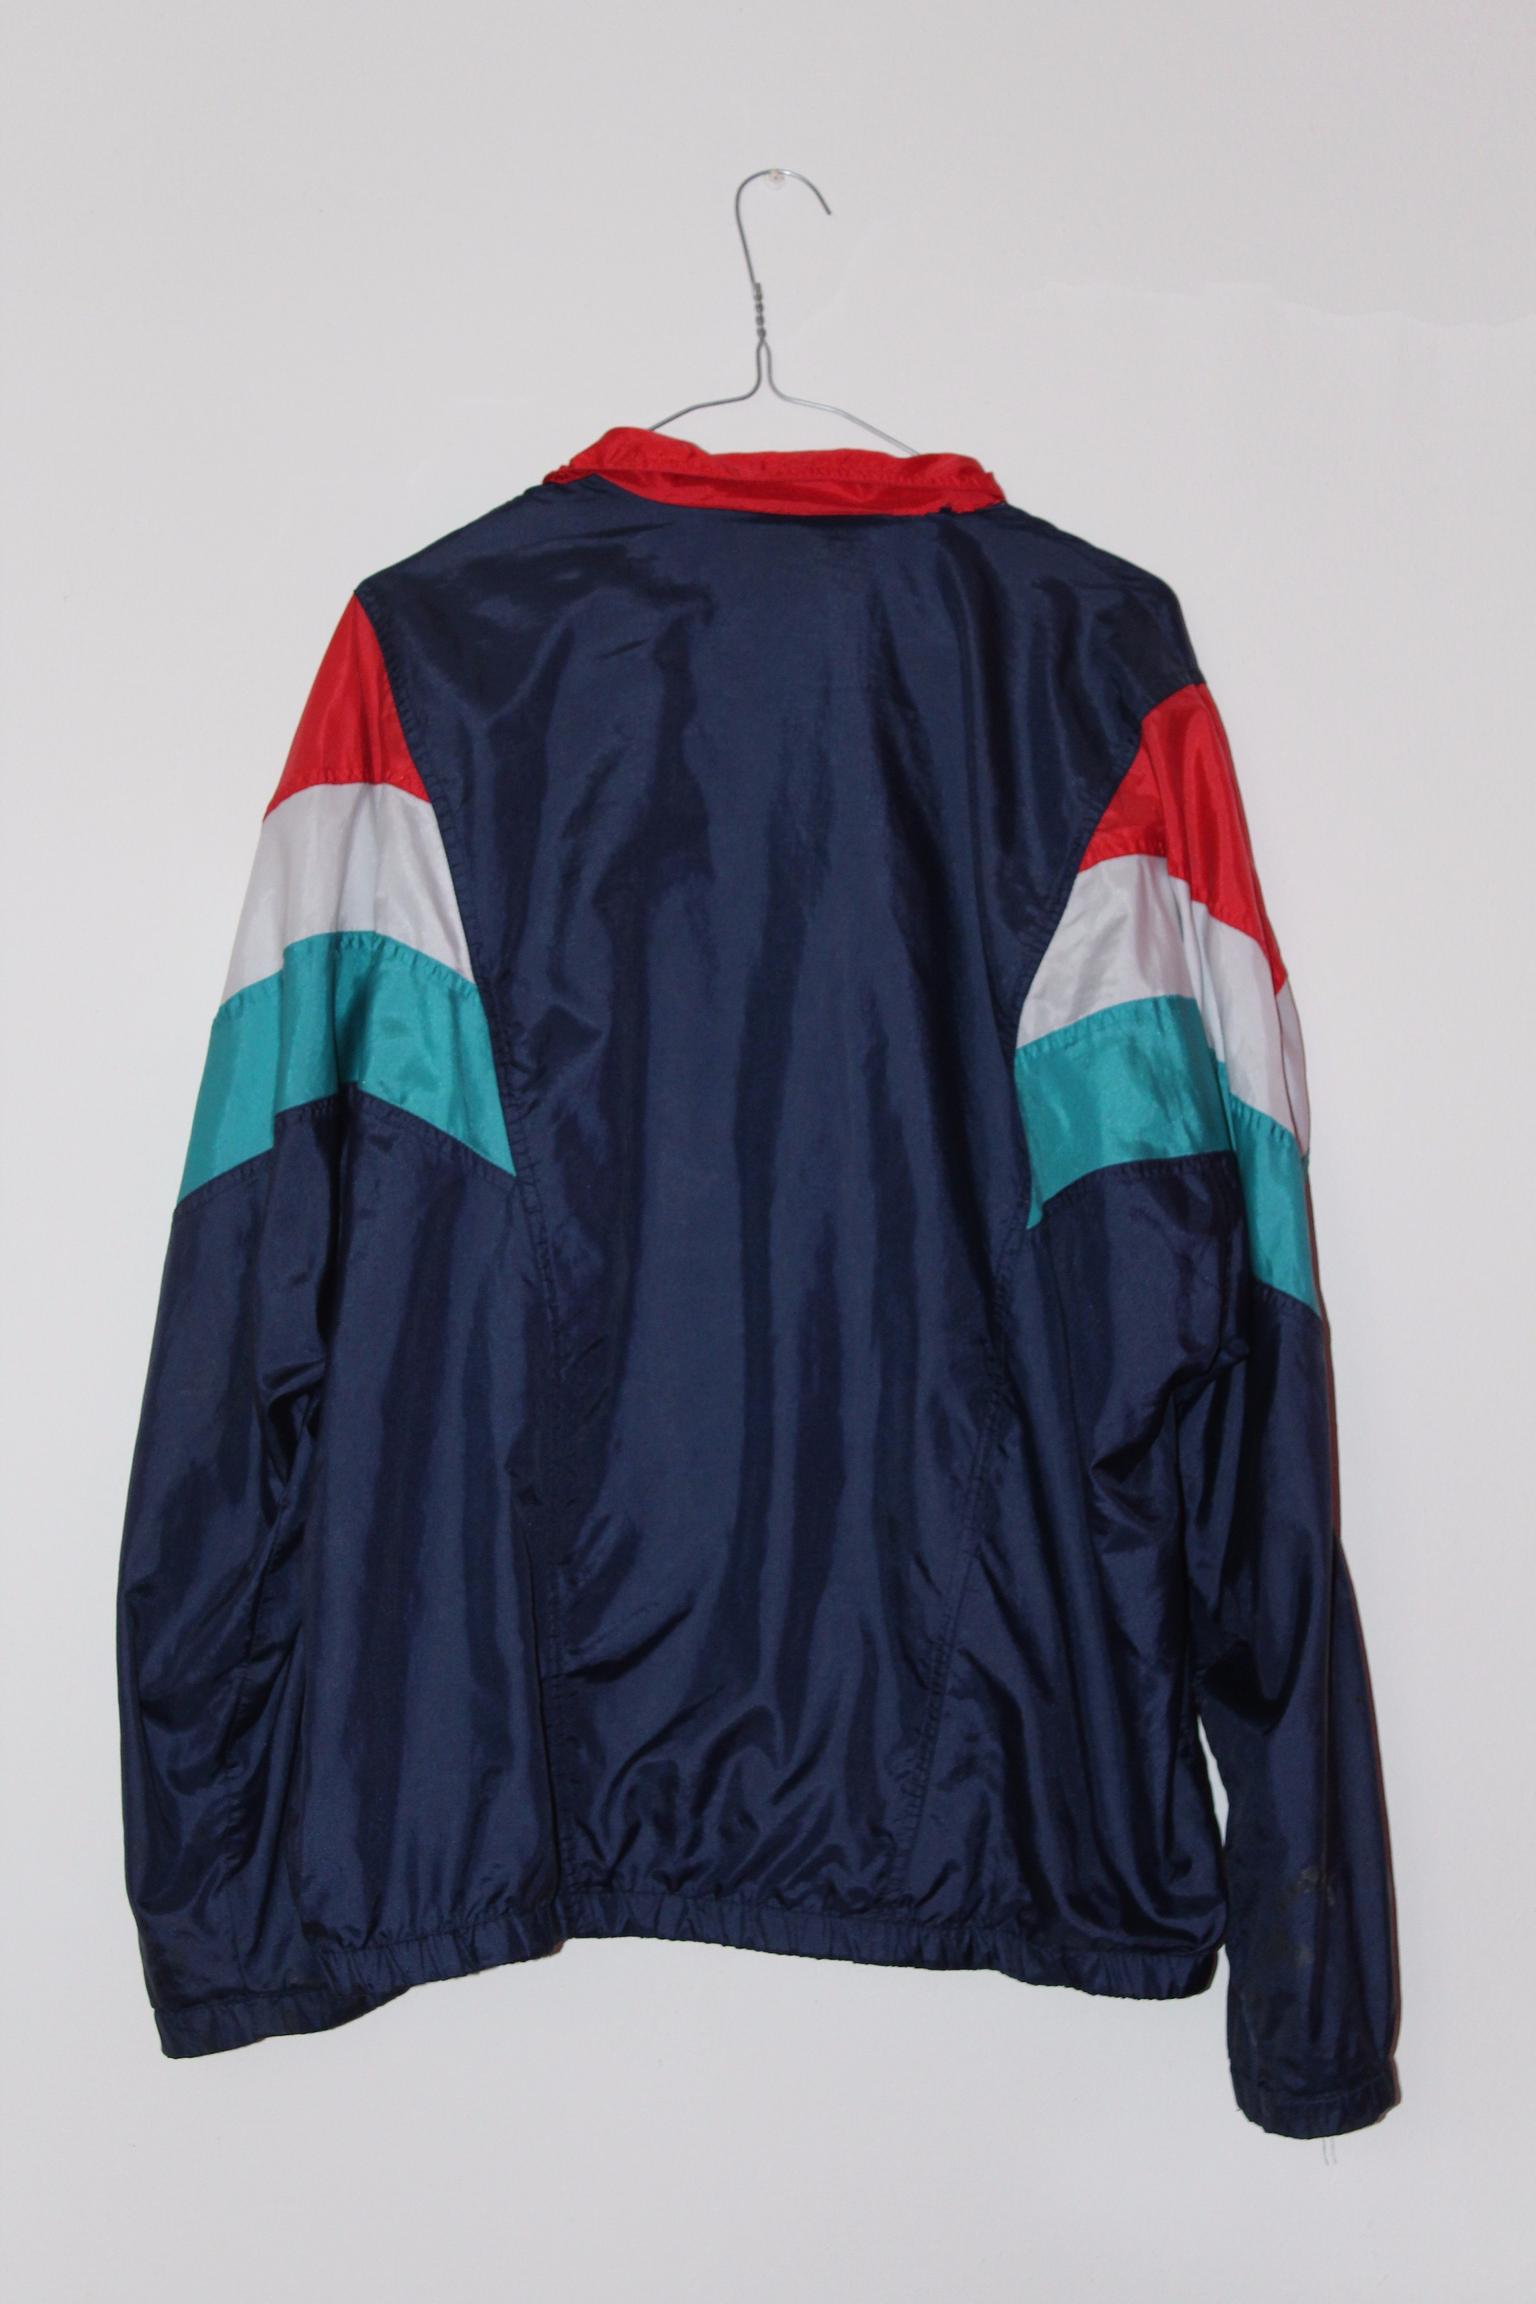 giacca adidas anni 90